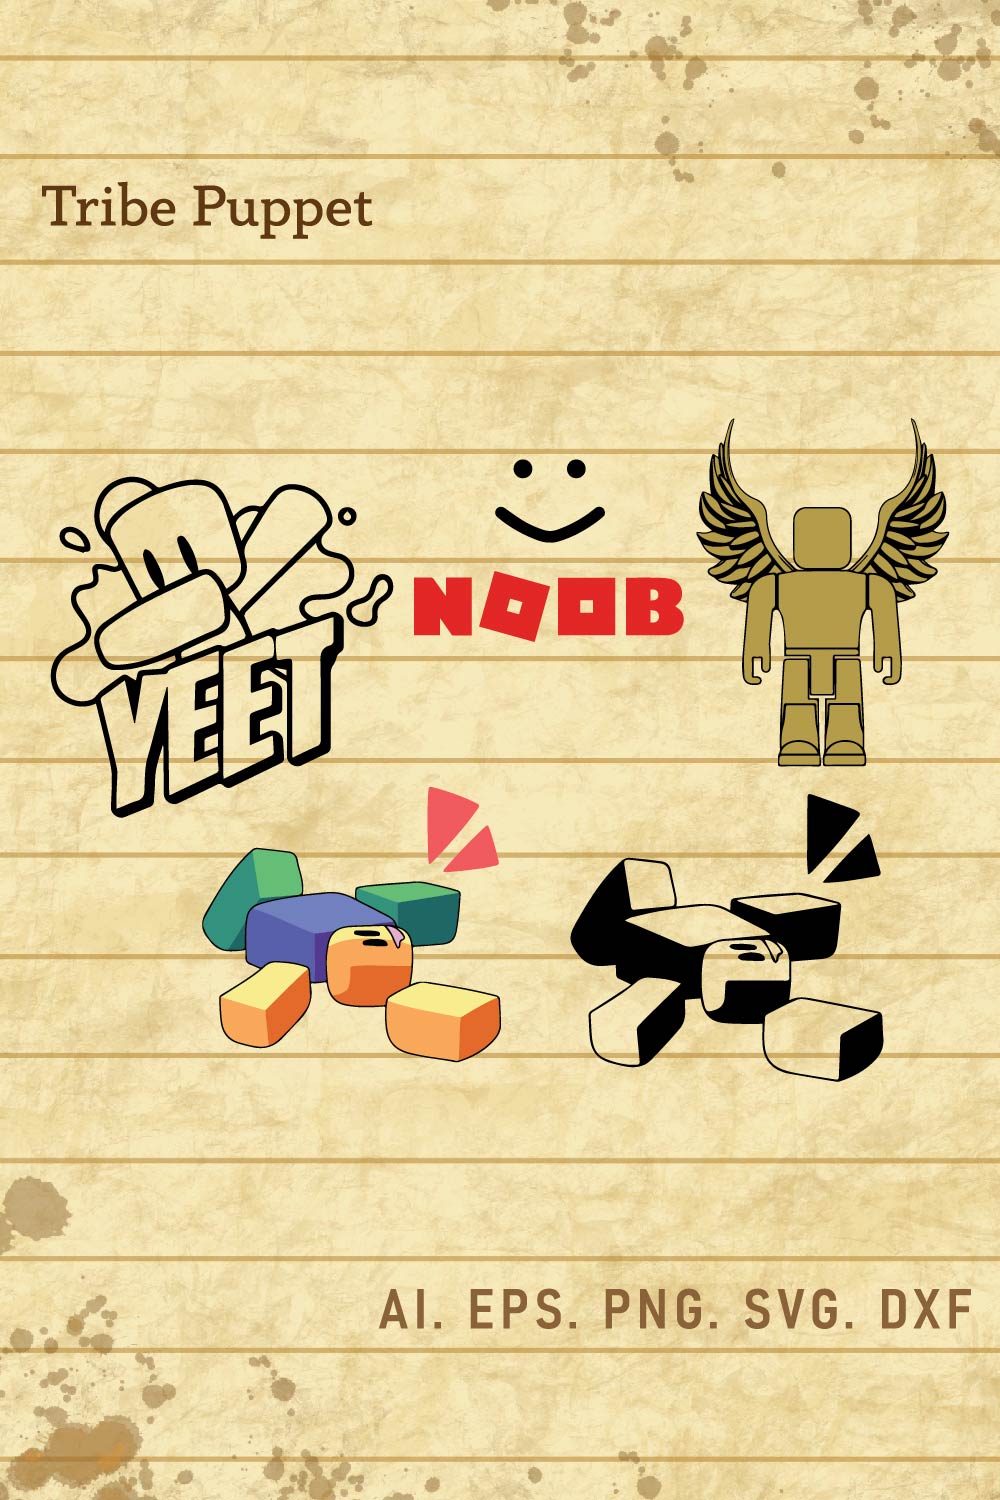 Roblox Letters number symbol character logo SVG digital file